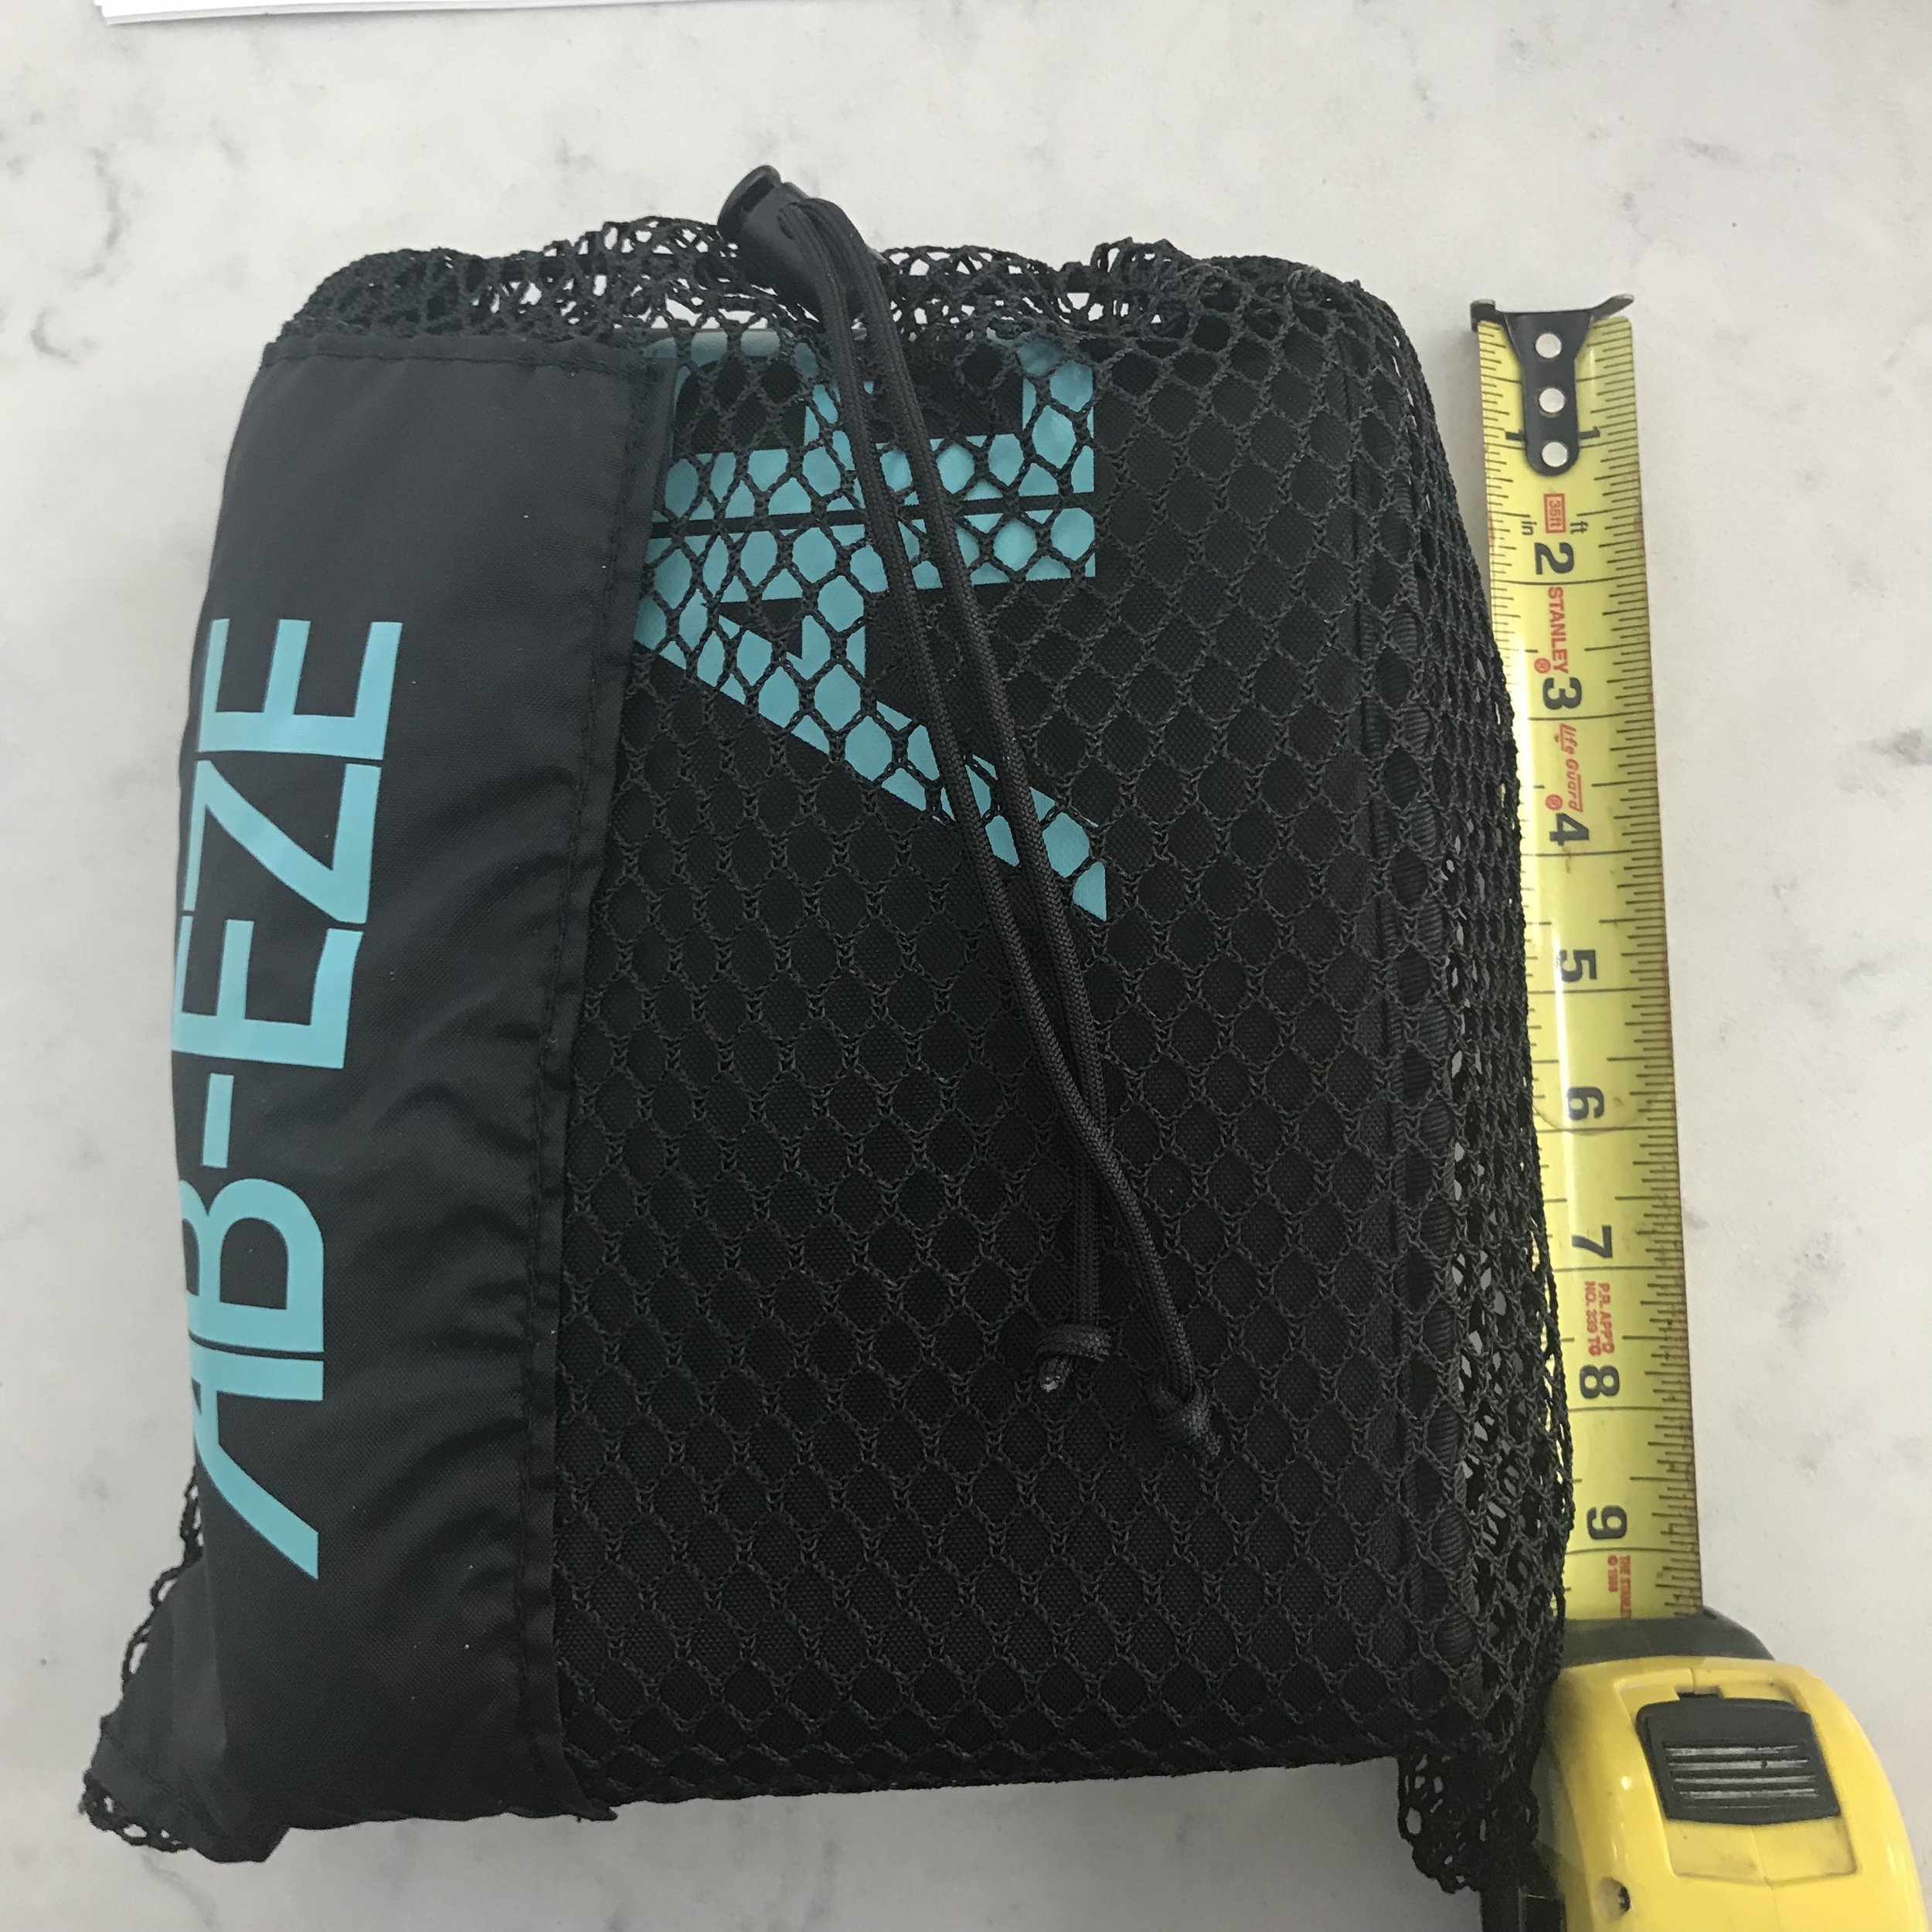 Ab-eze new product launch black bag